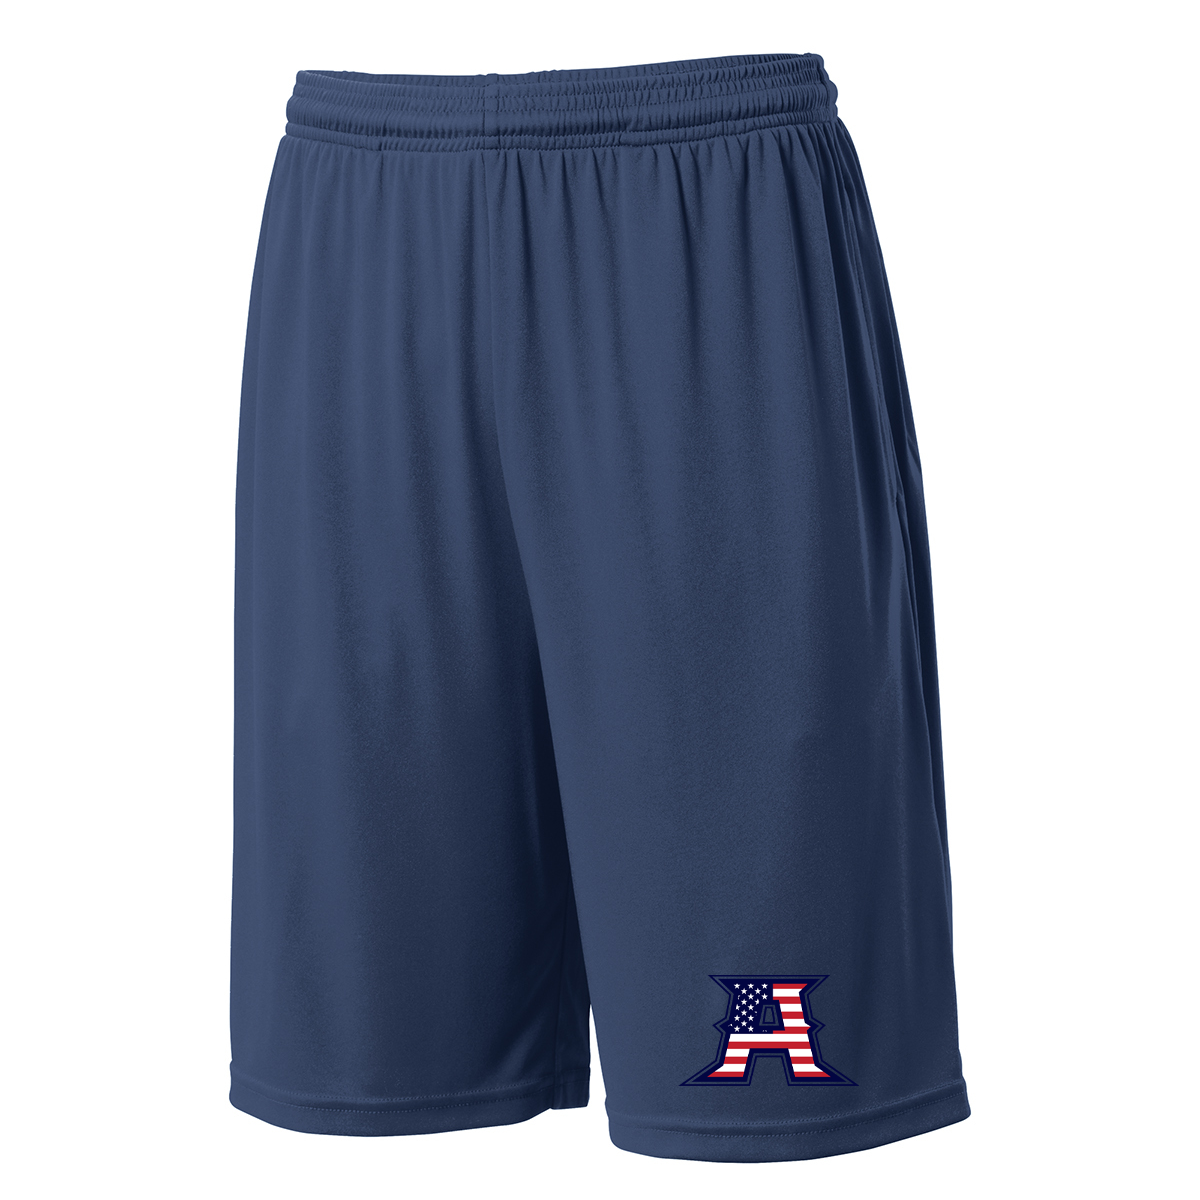 All American Baseball Shorts